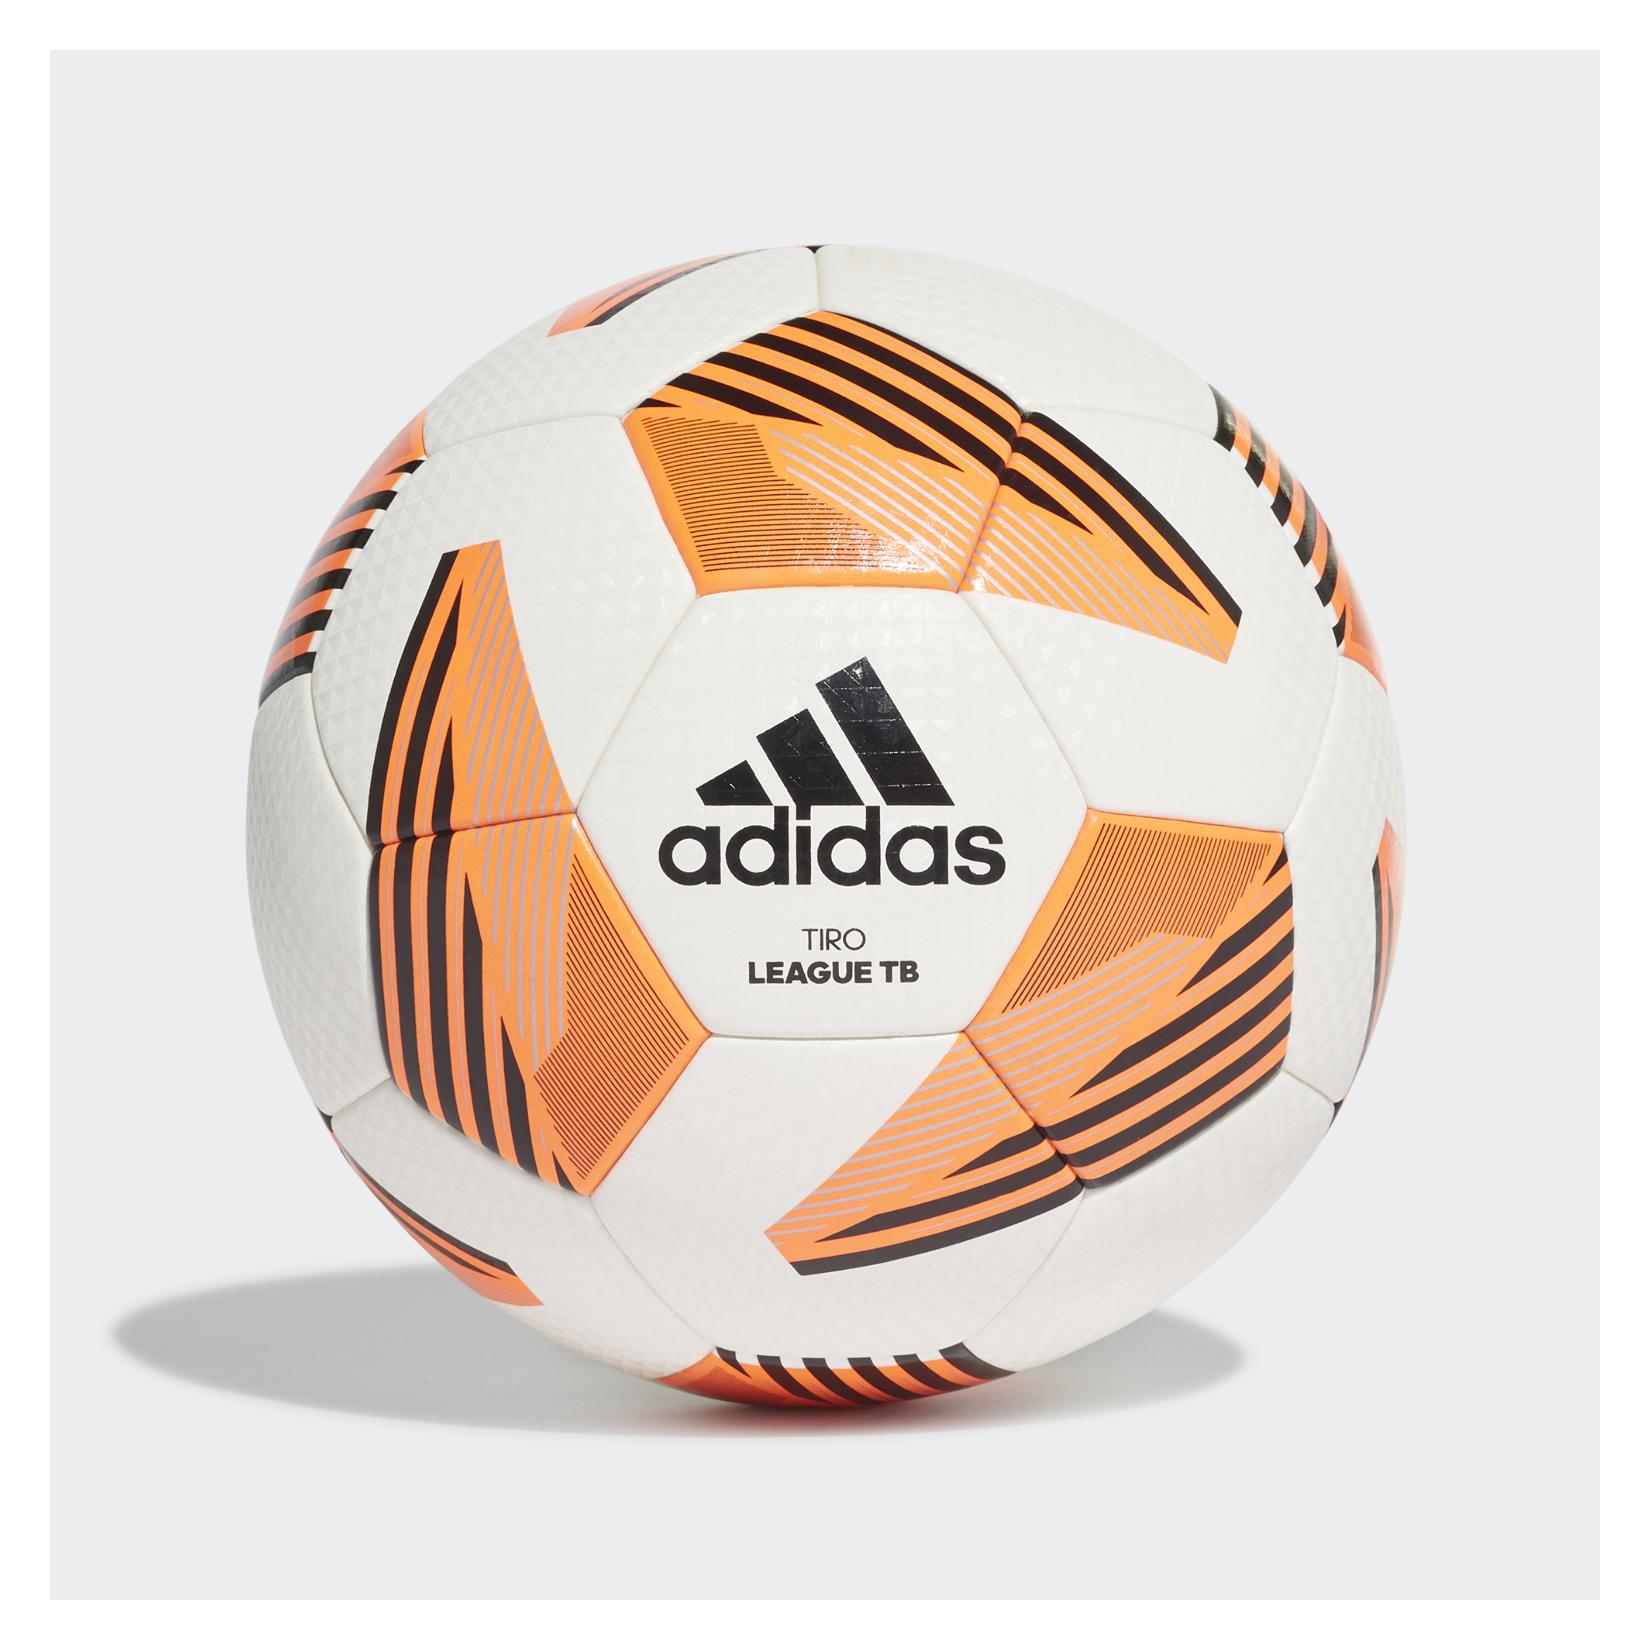 adidas Tiro League TB Ball - IMS Match Football - Kitlocker.com